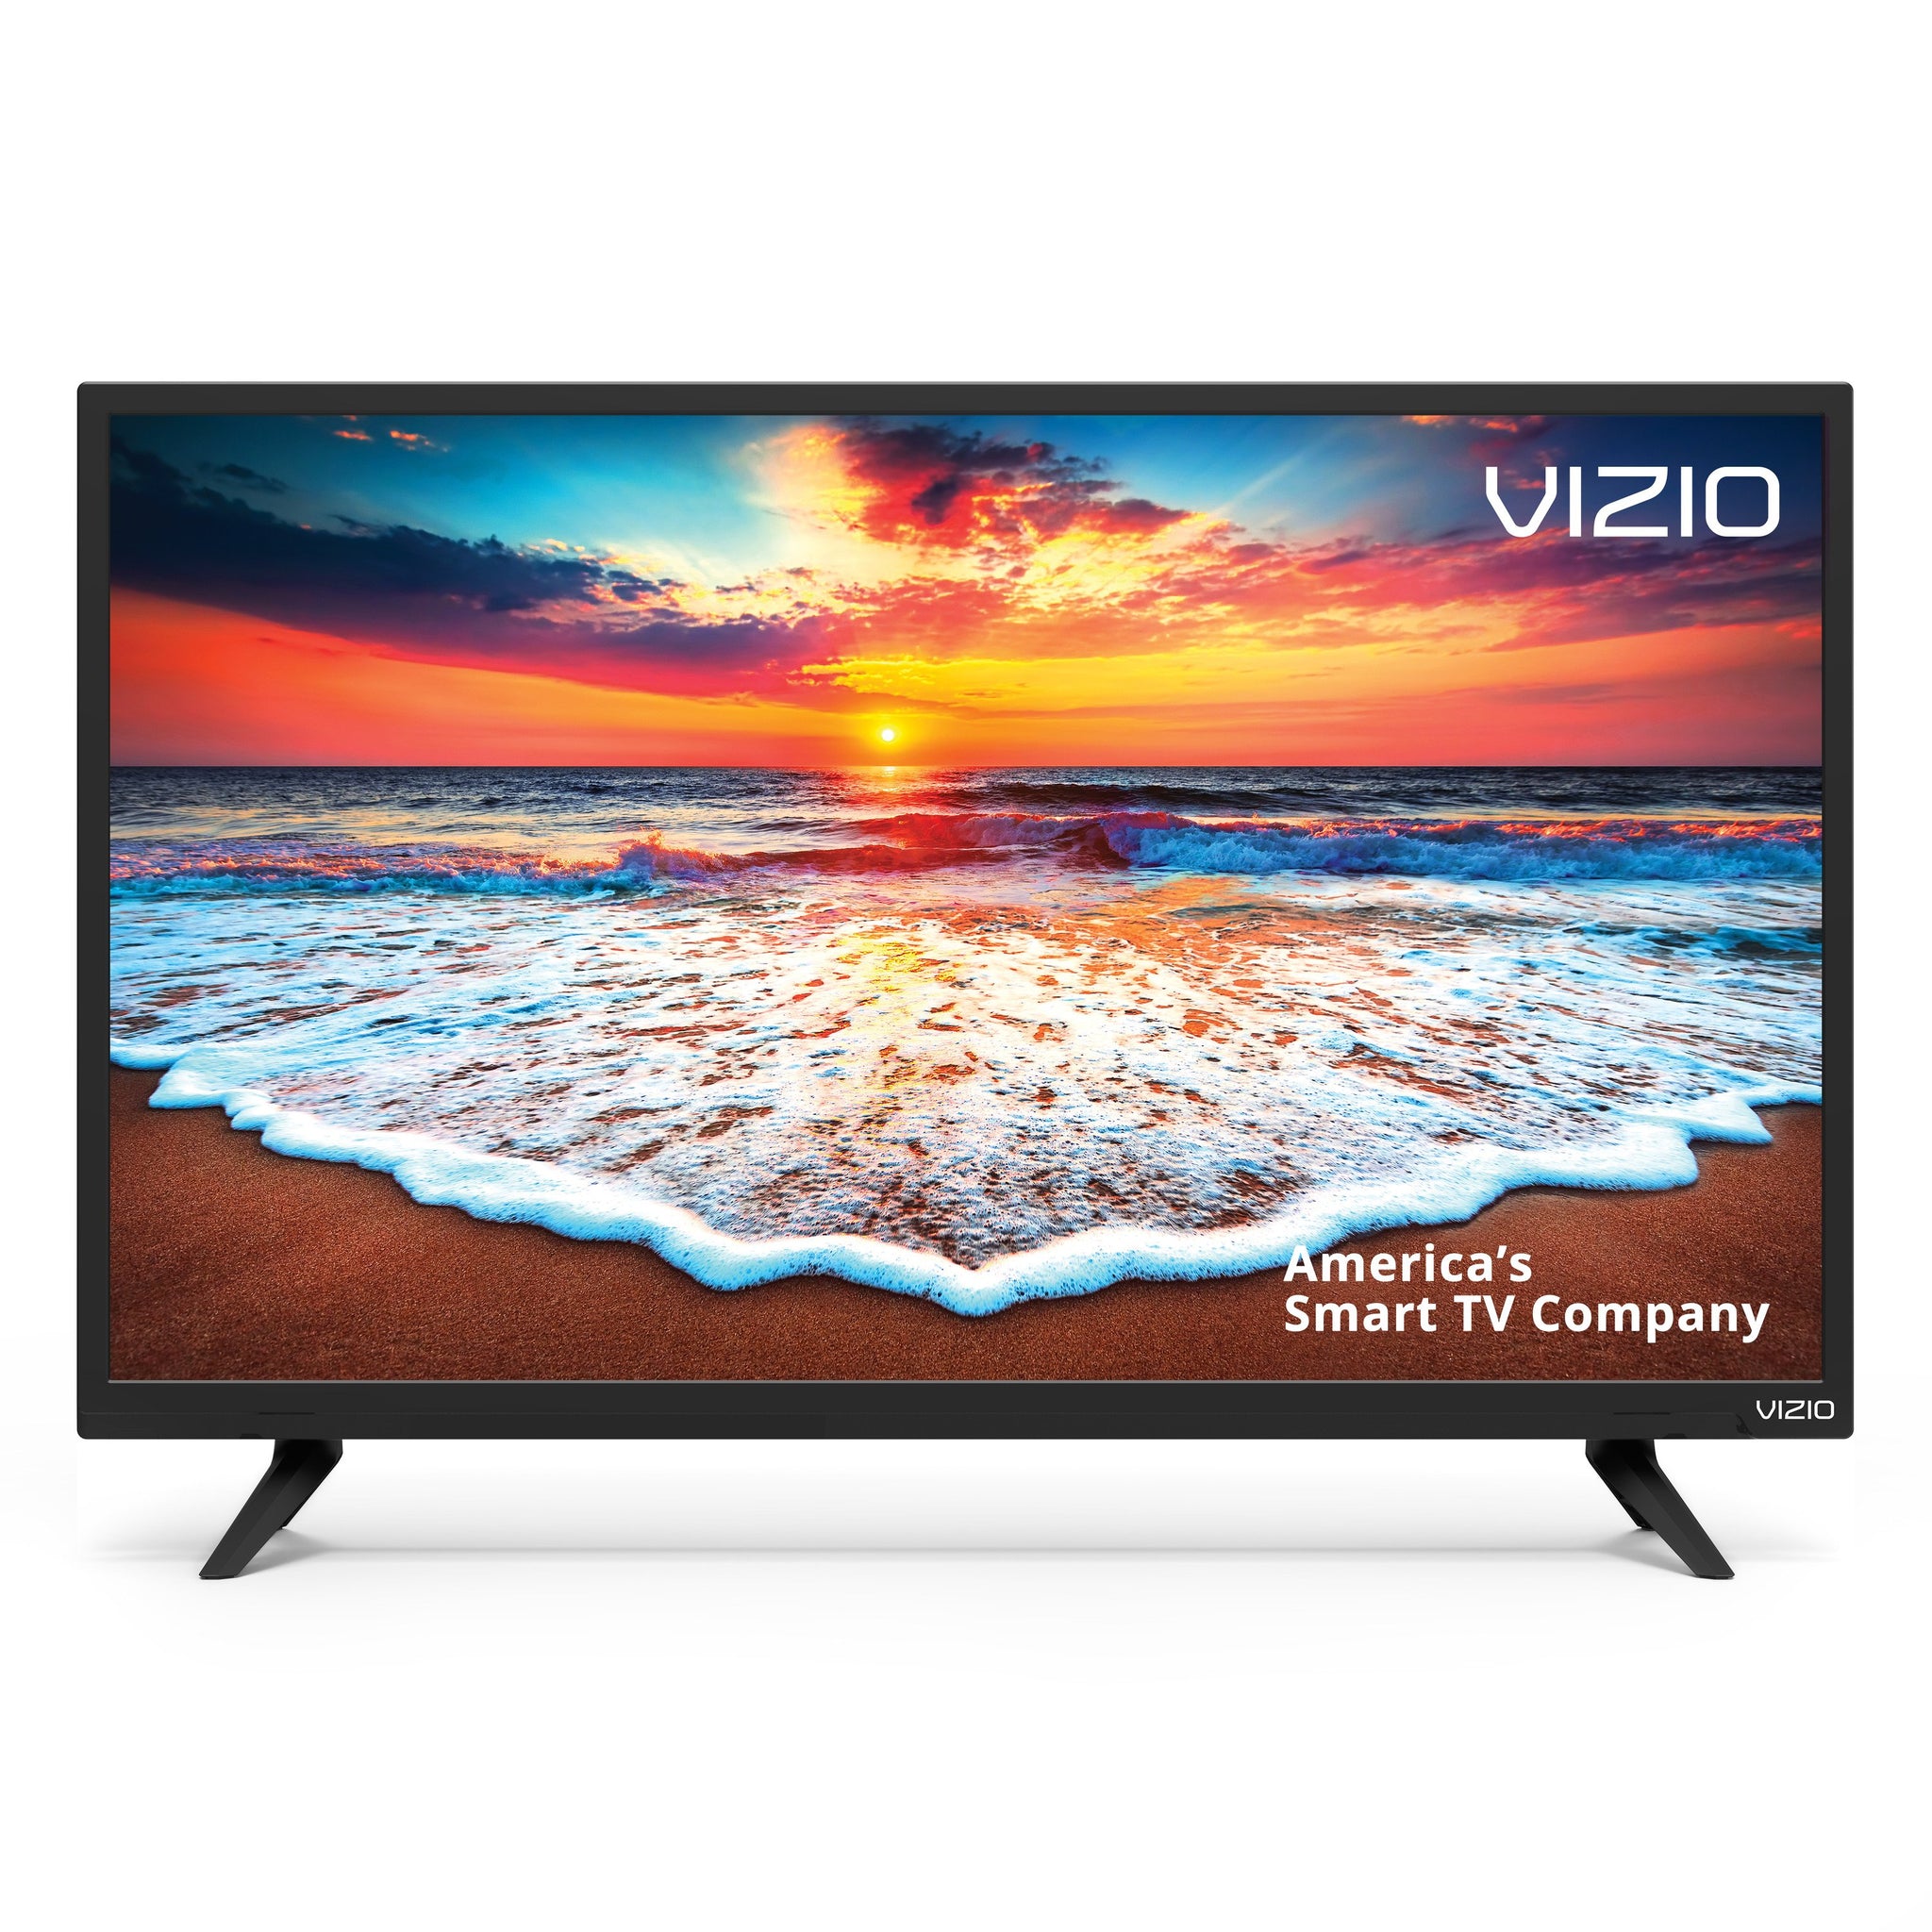 Vizio Smart TV 32" LED Digital(Refurbished)